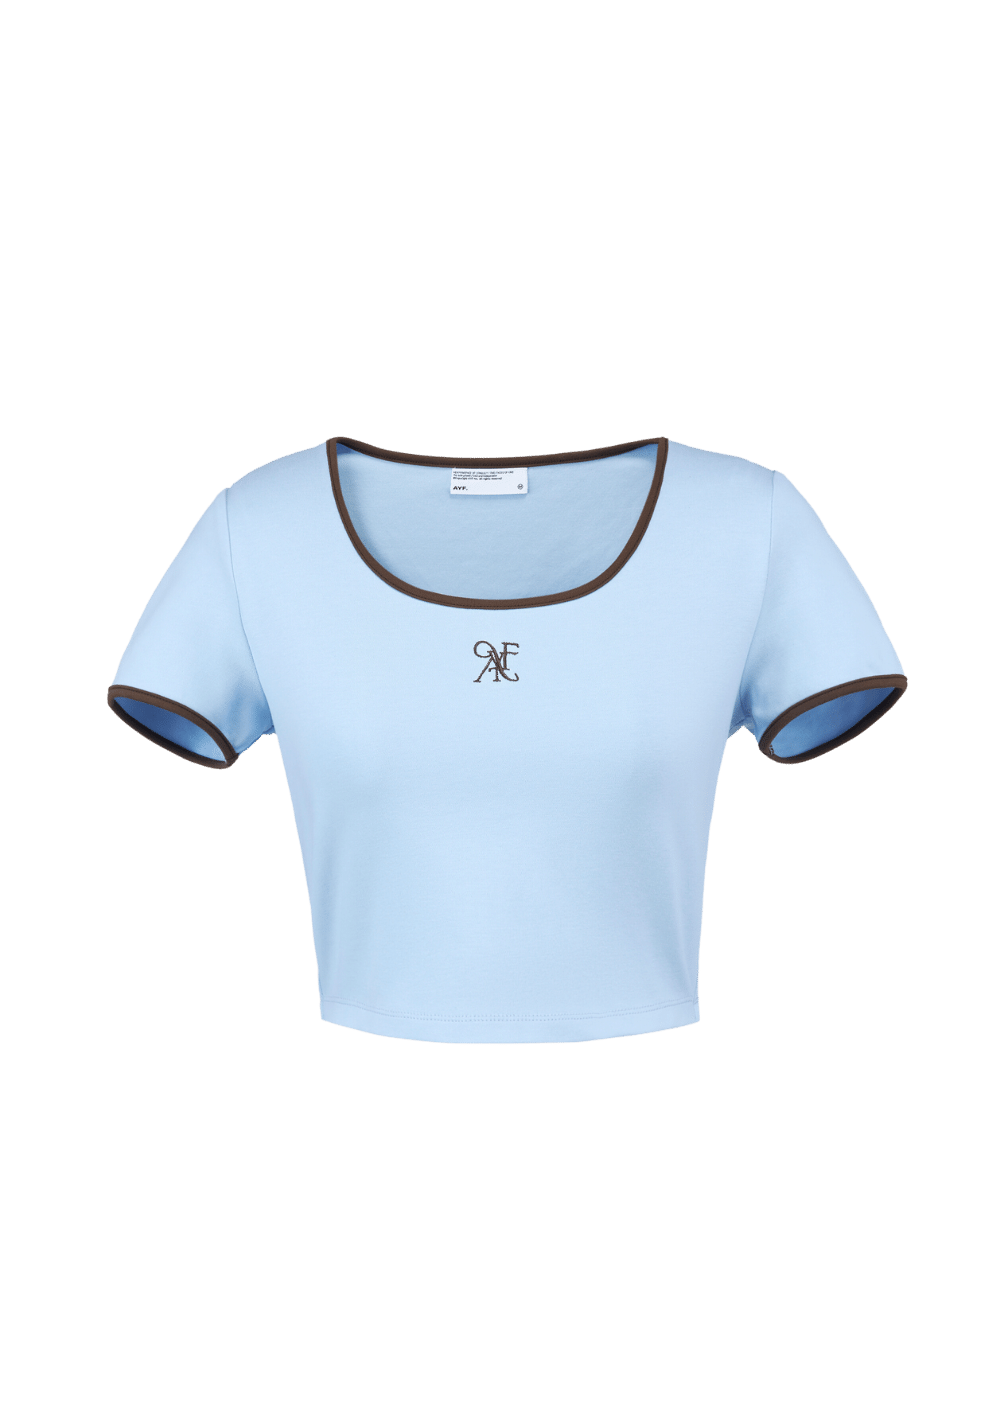 BAIGRAM AKLOPVII Women's Basic Slim fit Crop Top Tee Shirt Short